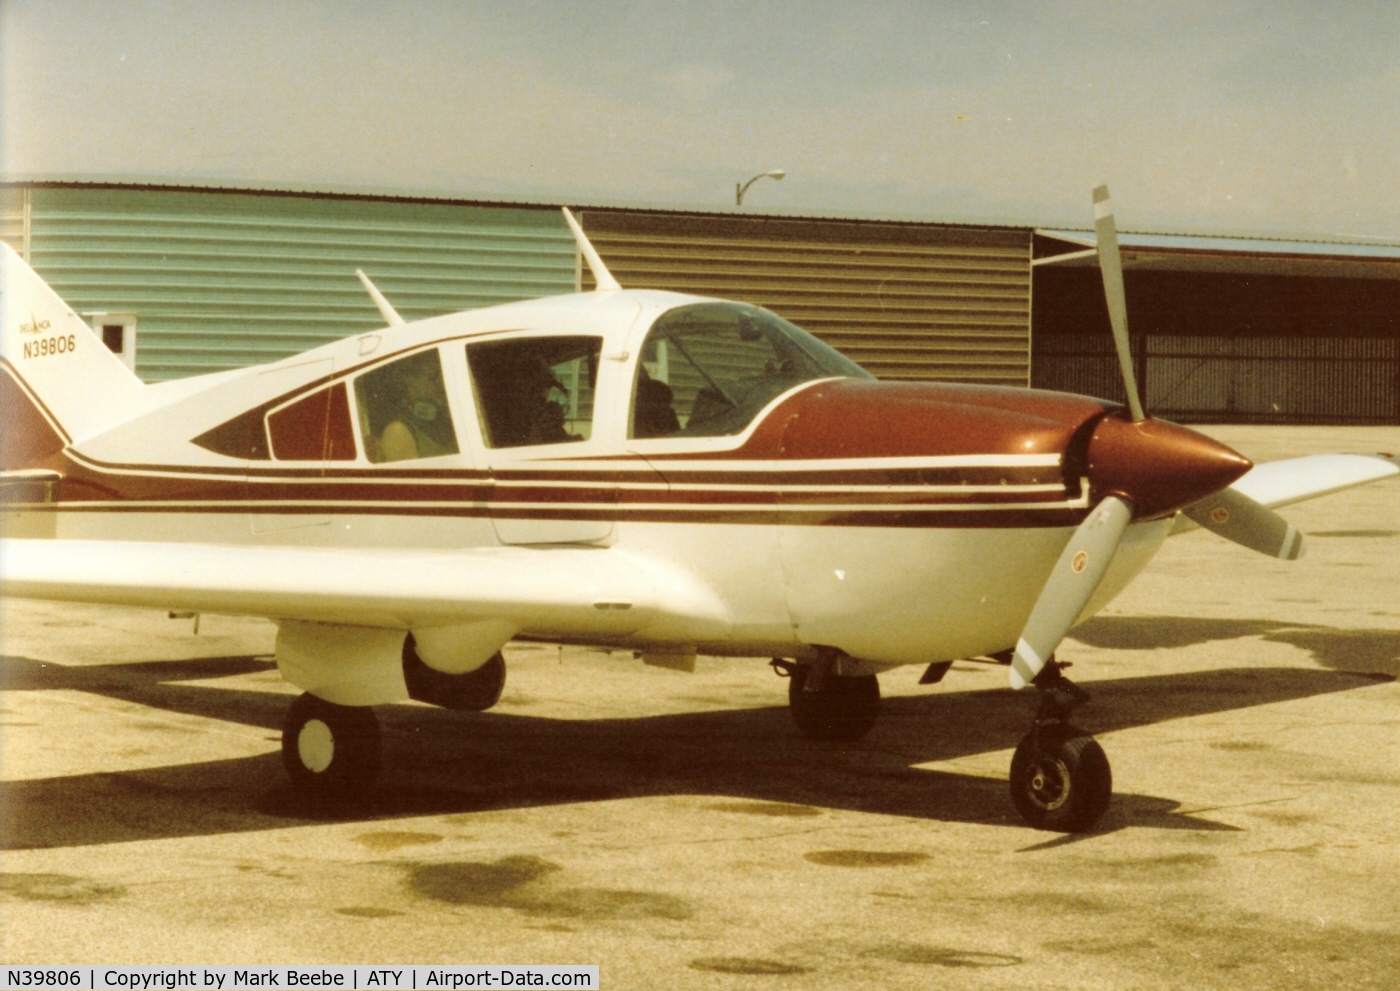 N39806, 1972 Bellanca 17-30A Viking C/N 73-30510, 39806 in Watertown SD early 1983. Clean and polished